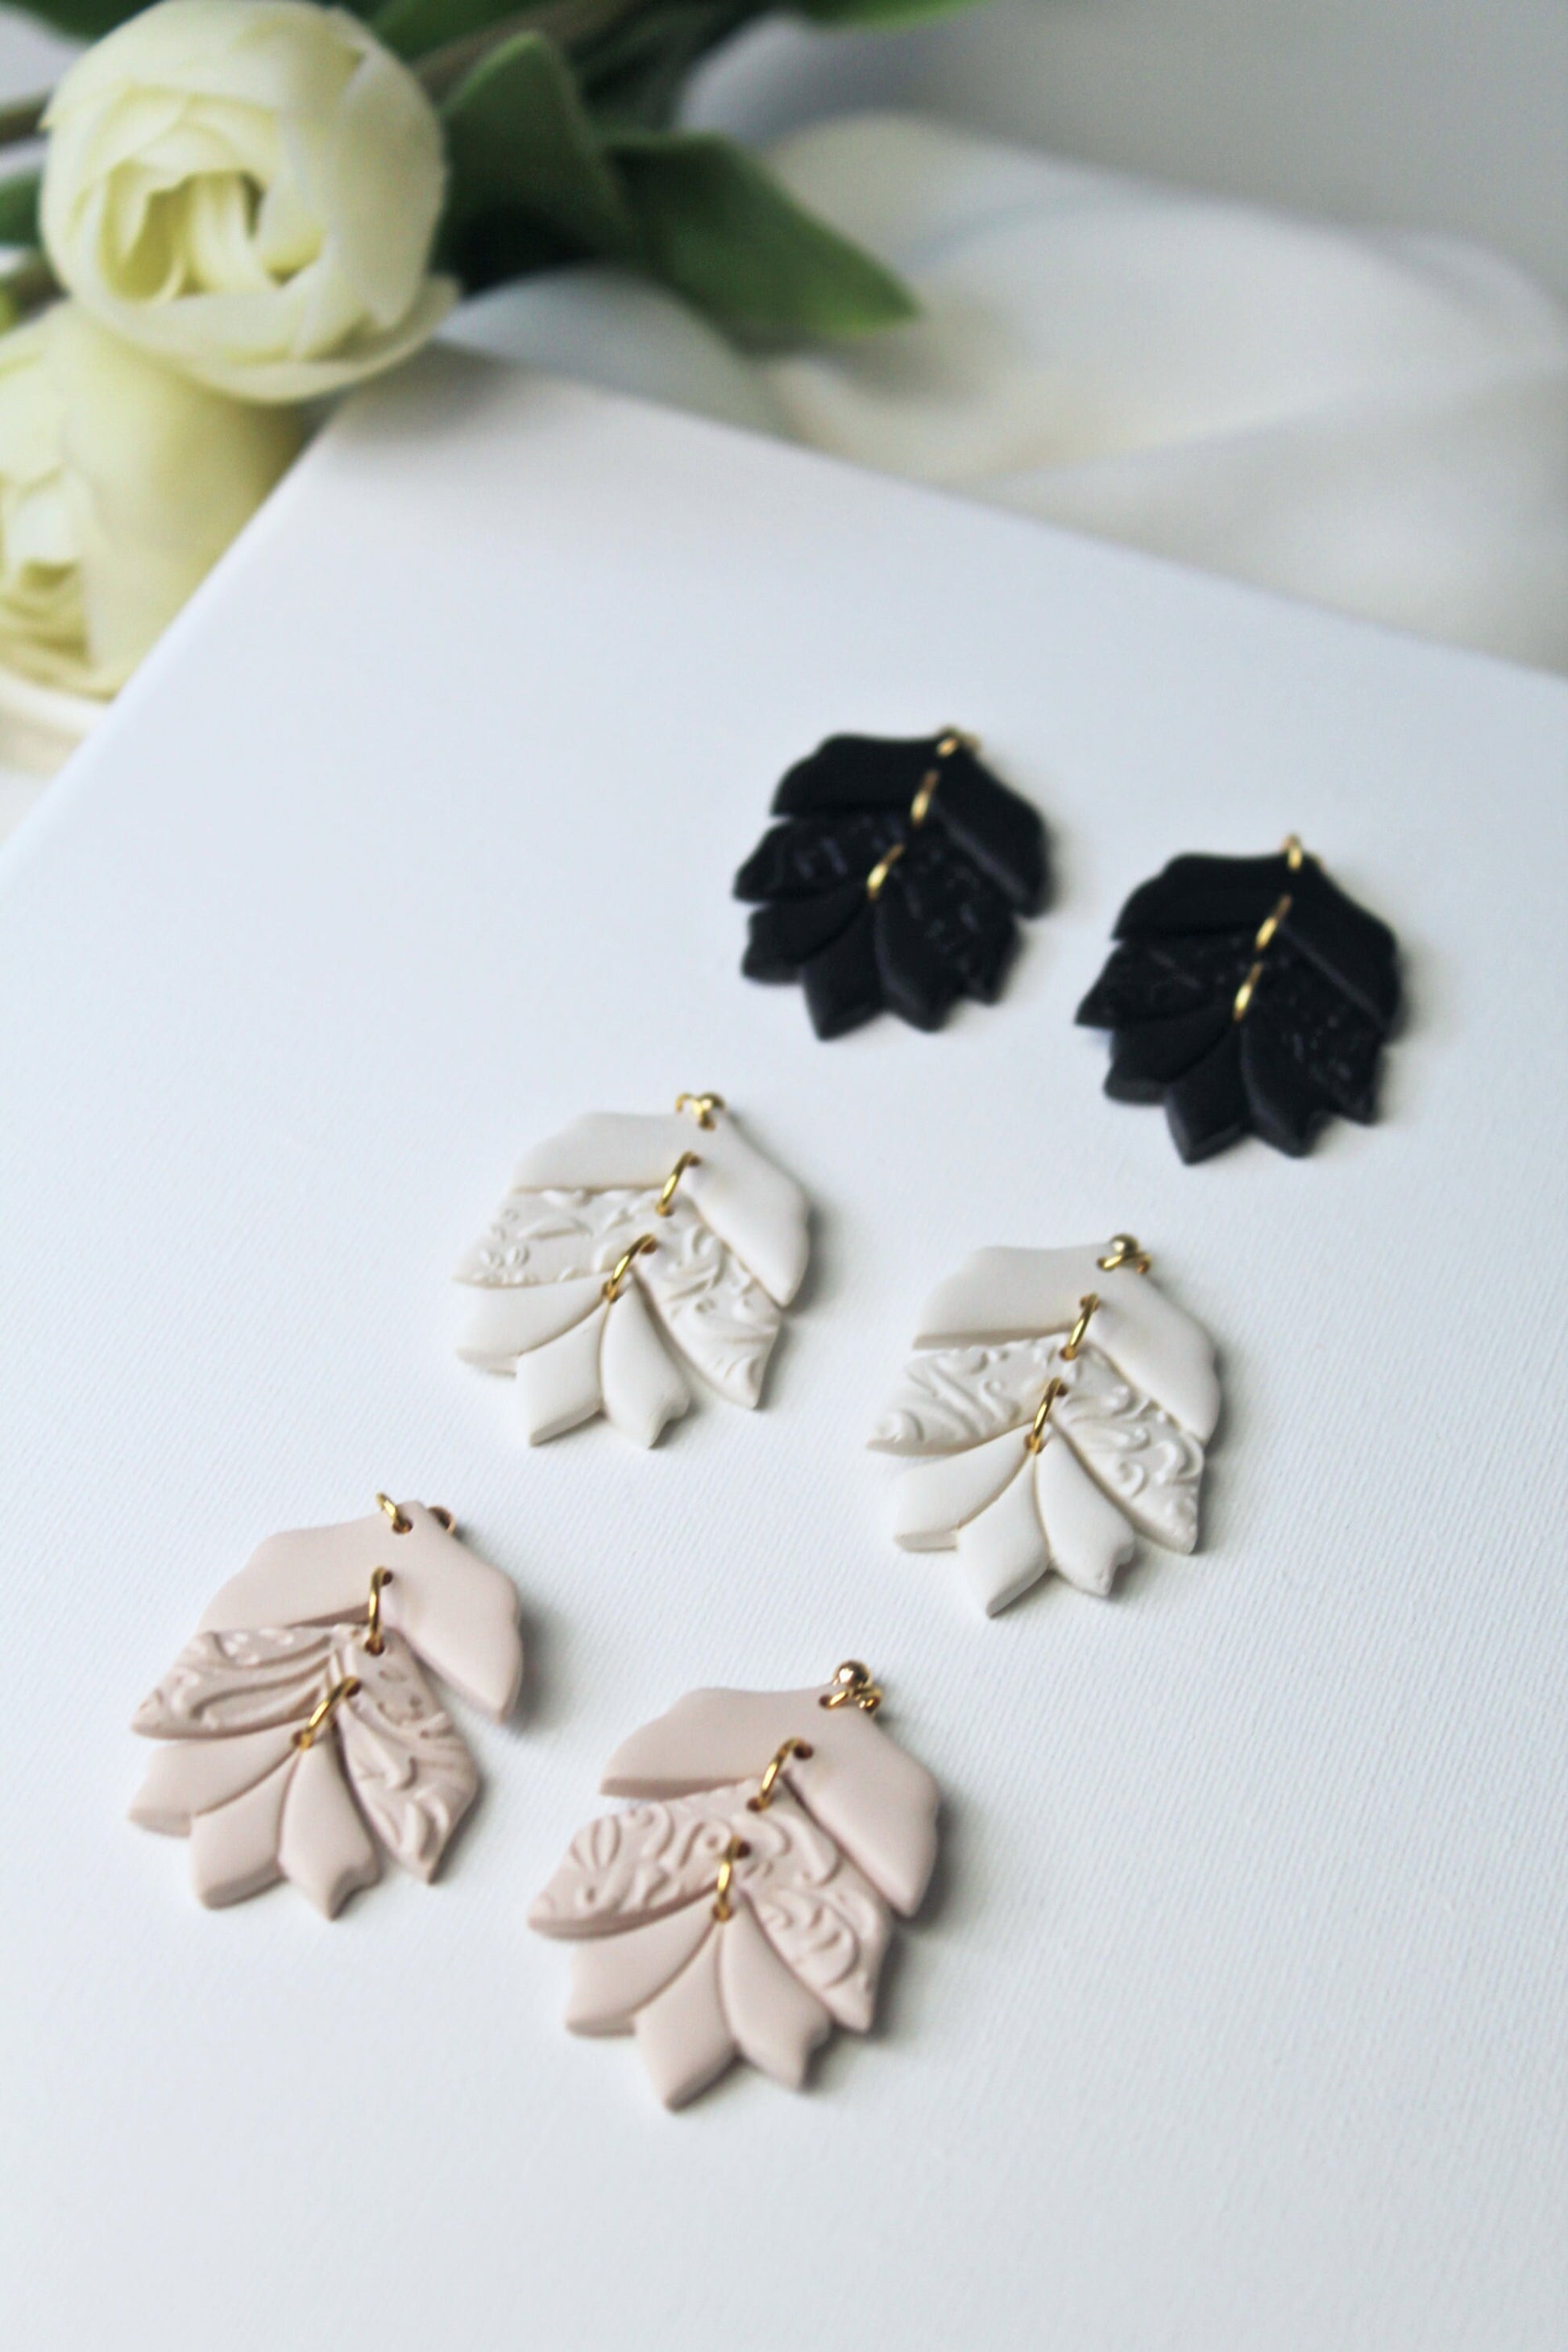 Earrings Polymer Clay, Leaf Earrings, Flower Earrings, Statement Earrings, Nature Inspired, Clay Earrings Handmade, Beige, White, Black,Gift